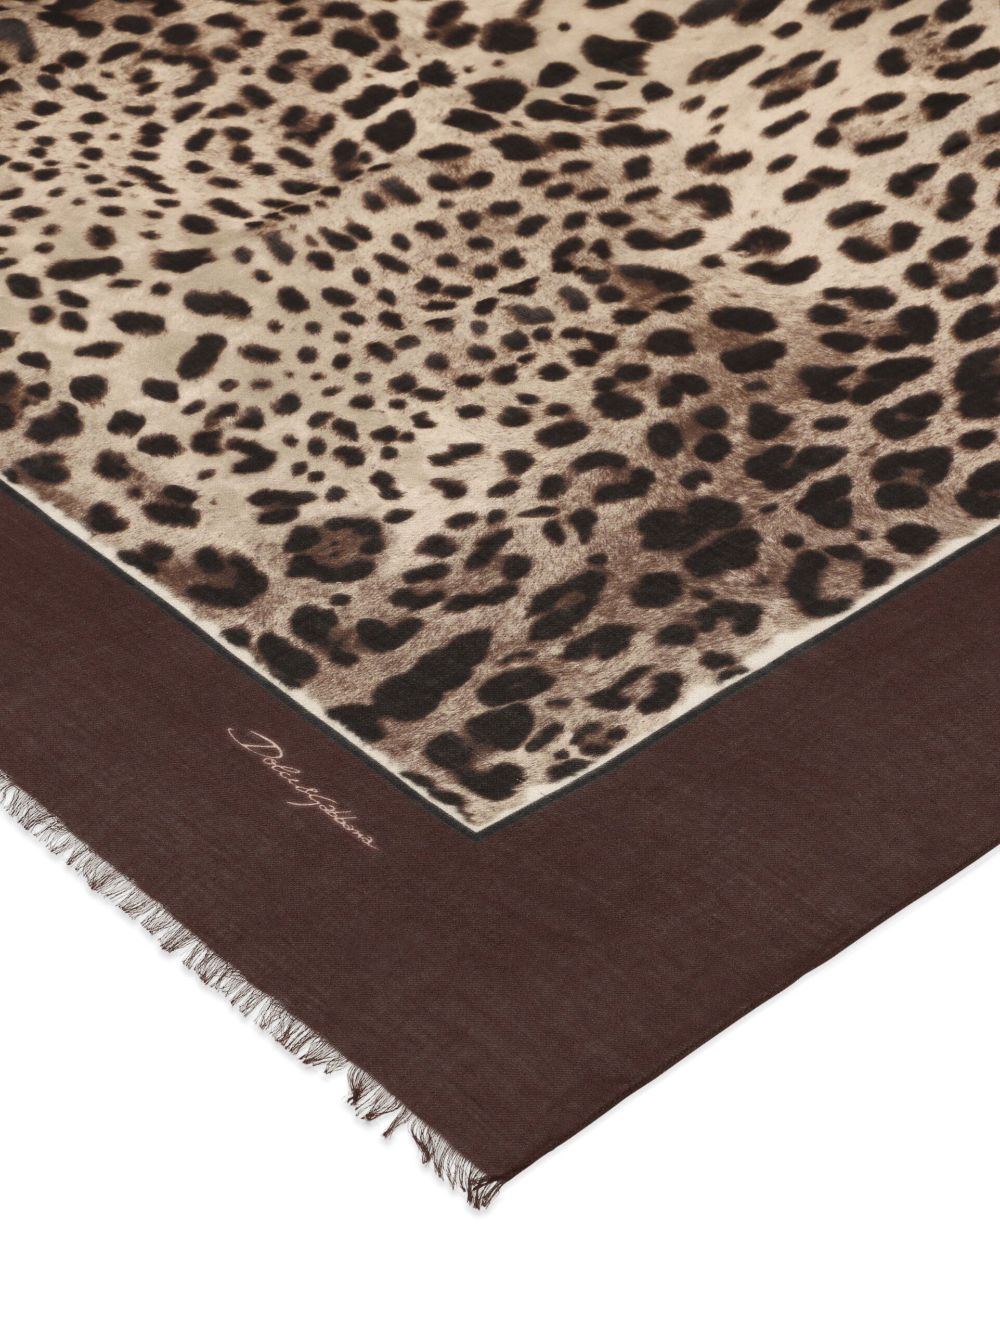 Leopard-print silk scarf